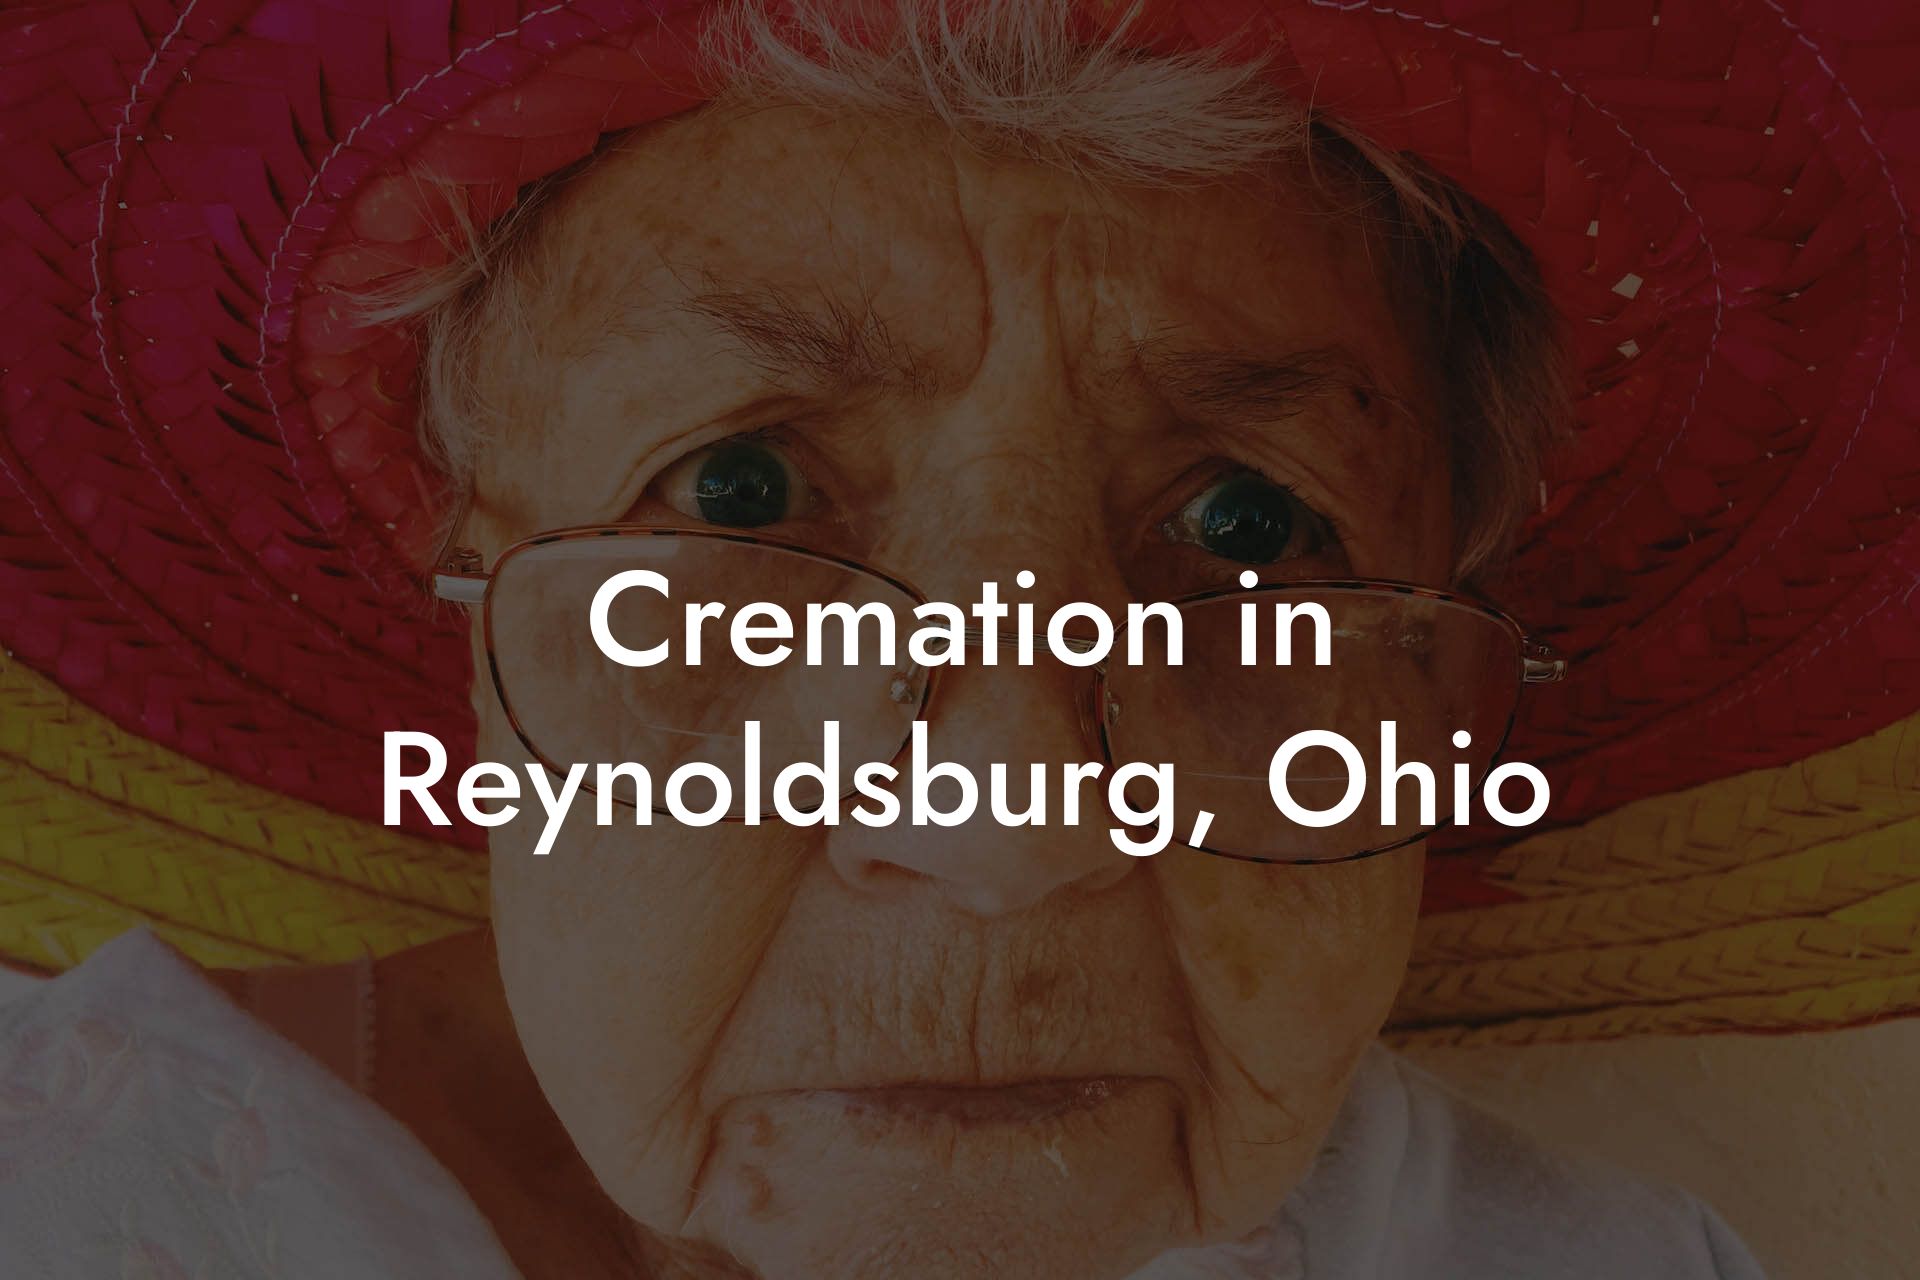 Cremation in Reynoldsburg, Ohio